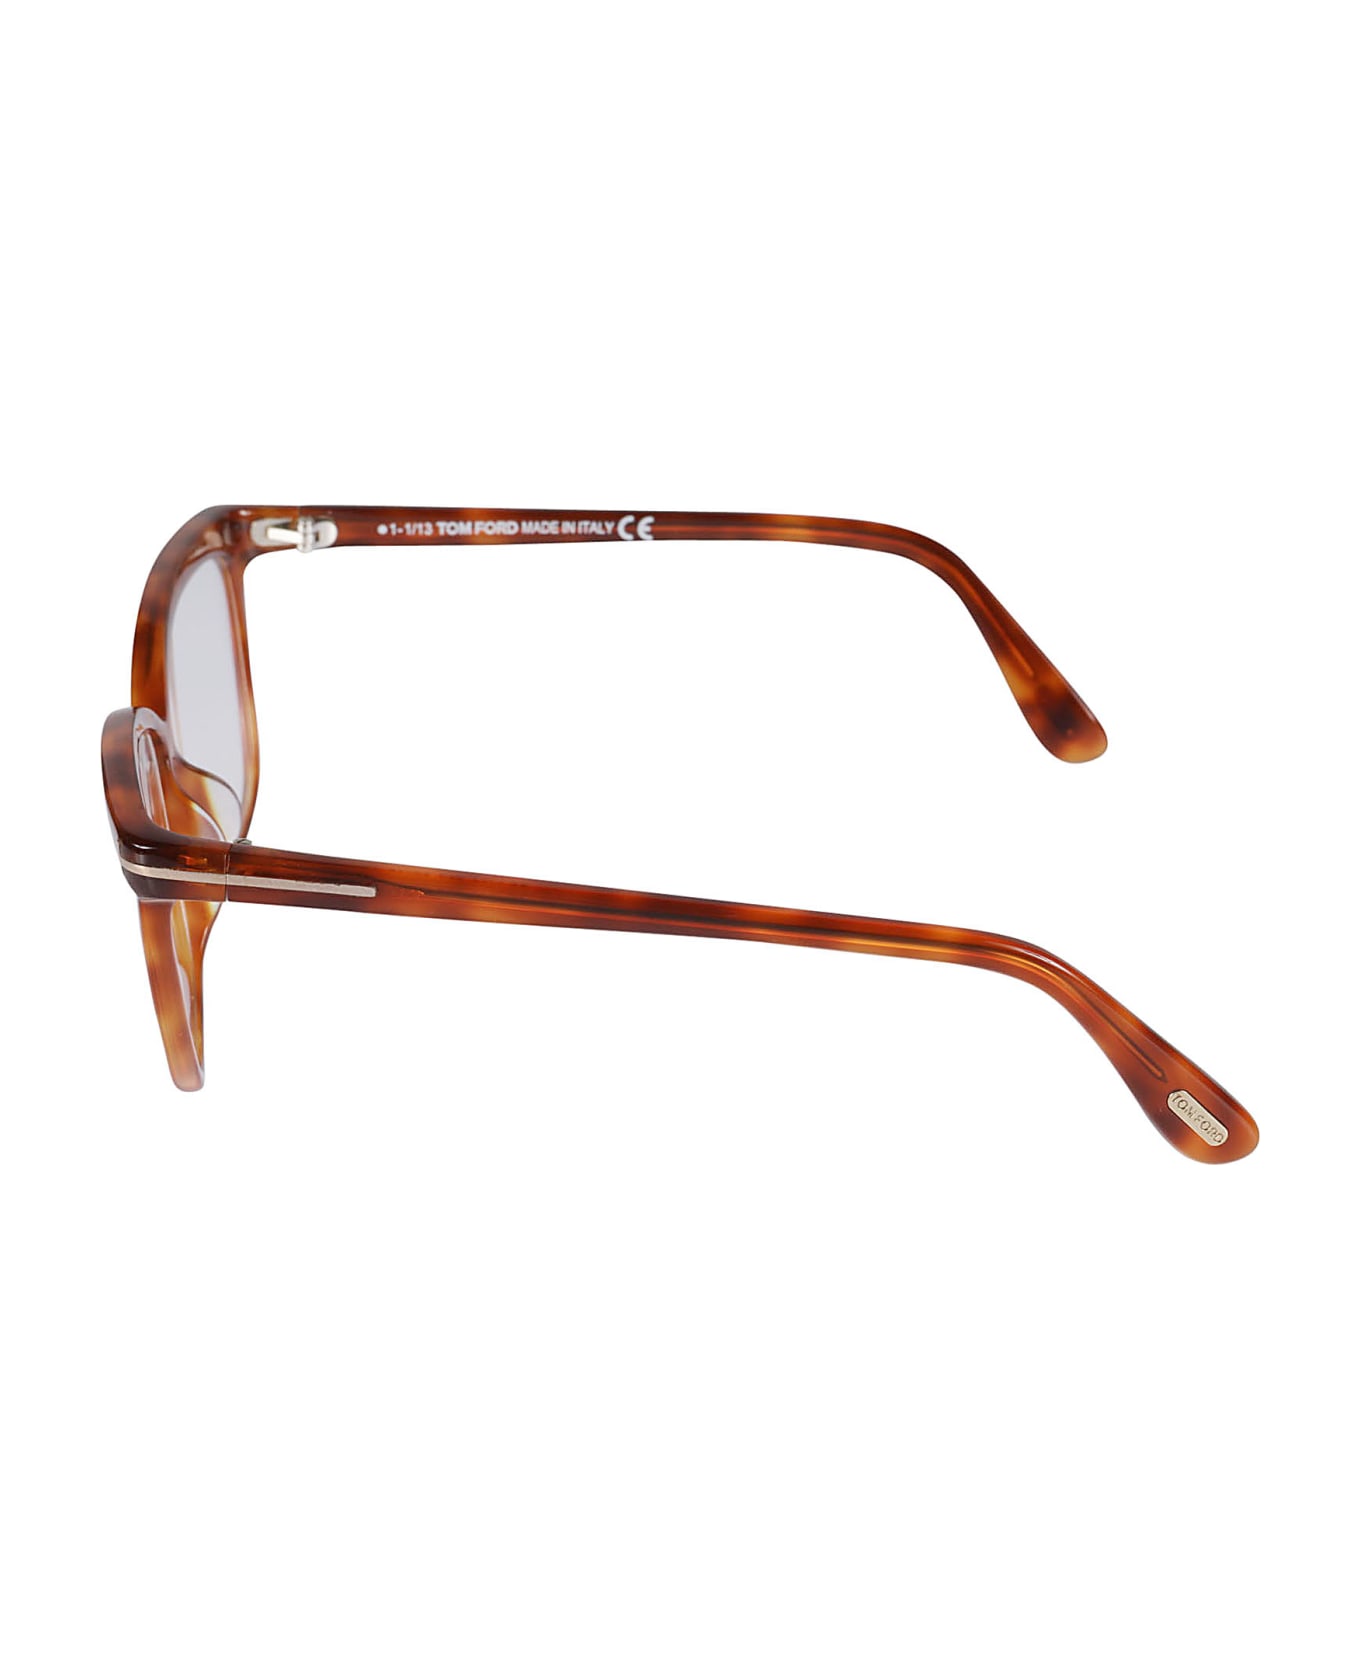 Tom Ford Eyewear Cross-bridge Clear Lens Glasses - 053